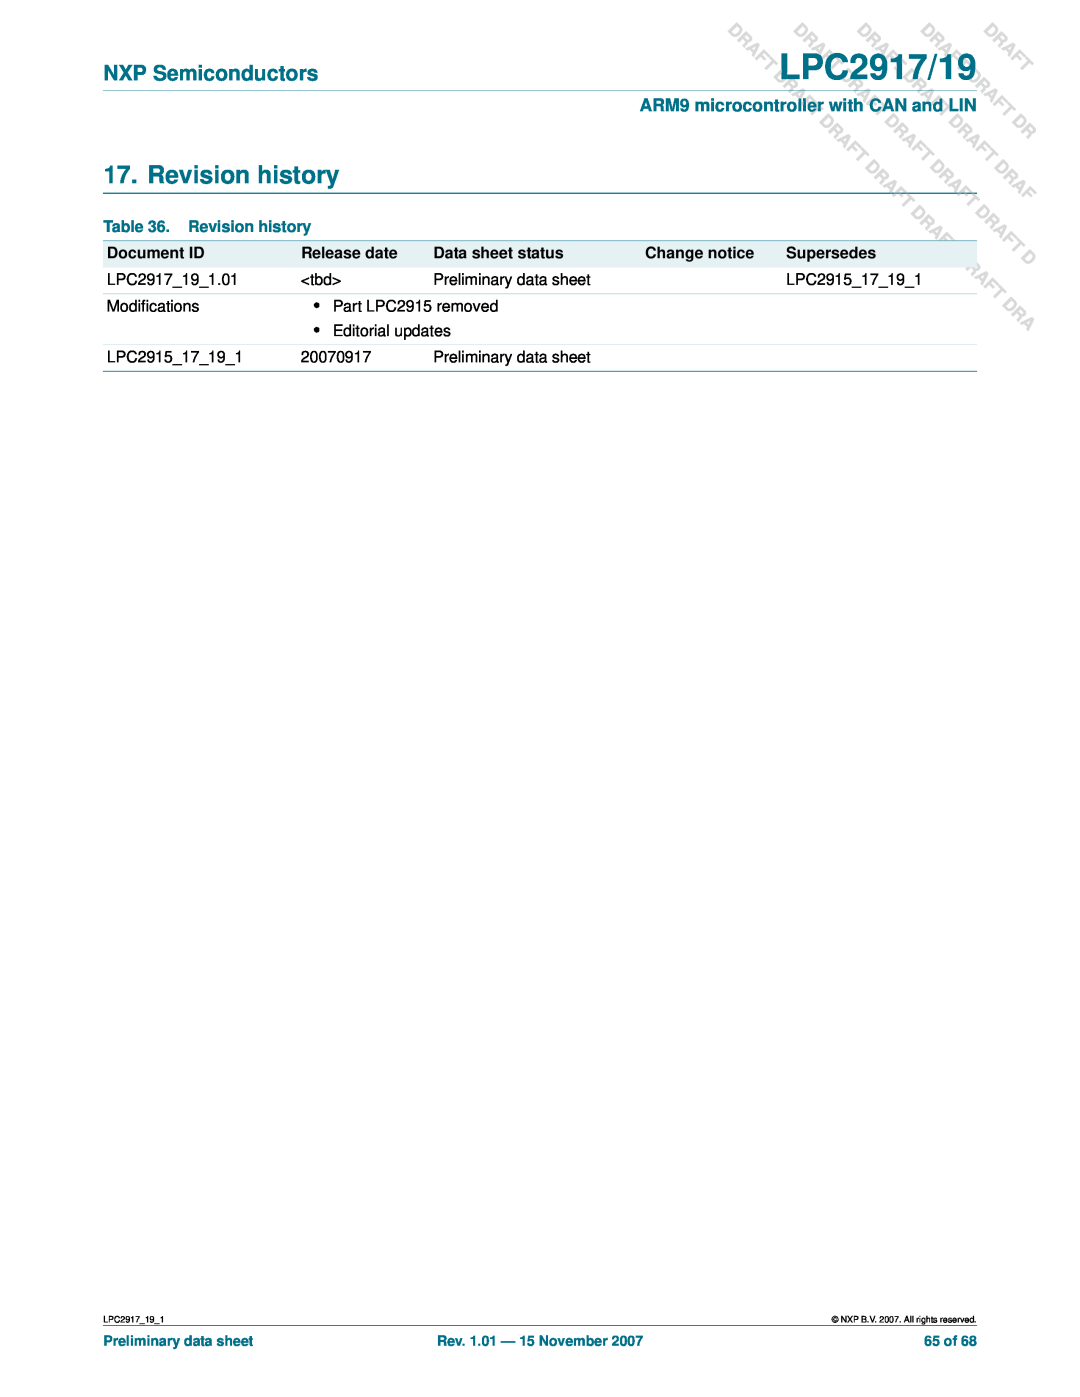 NXP Semiconductors LPC2919 user manual Revision history, DLPC2917/19, Draft Draft Draf 